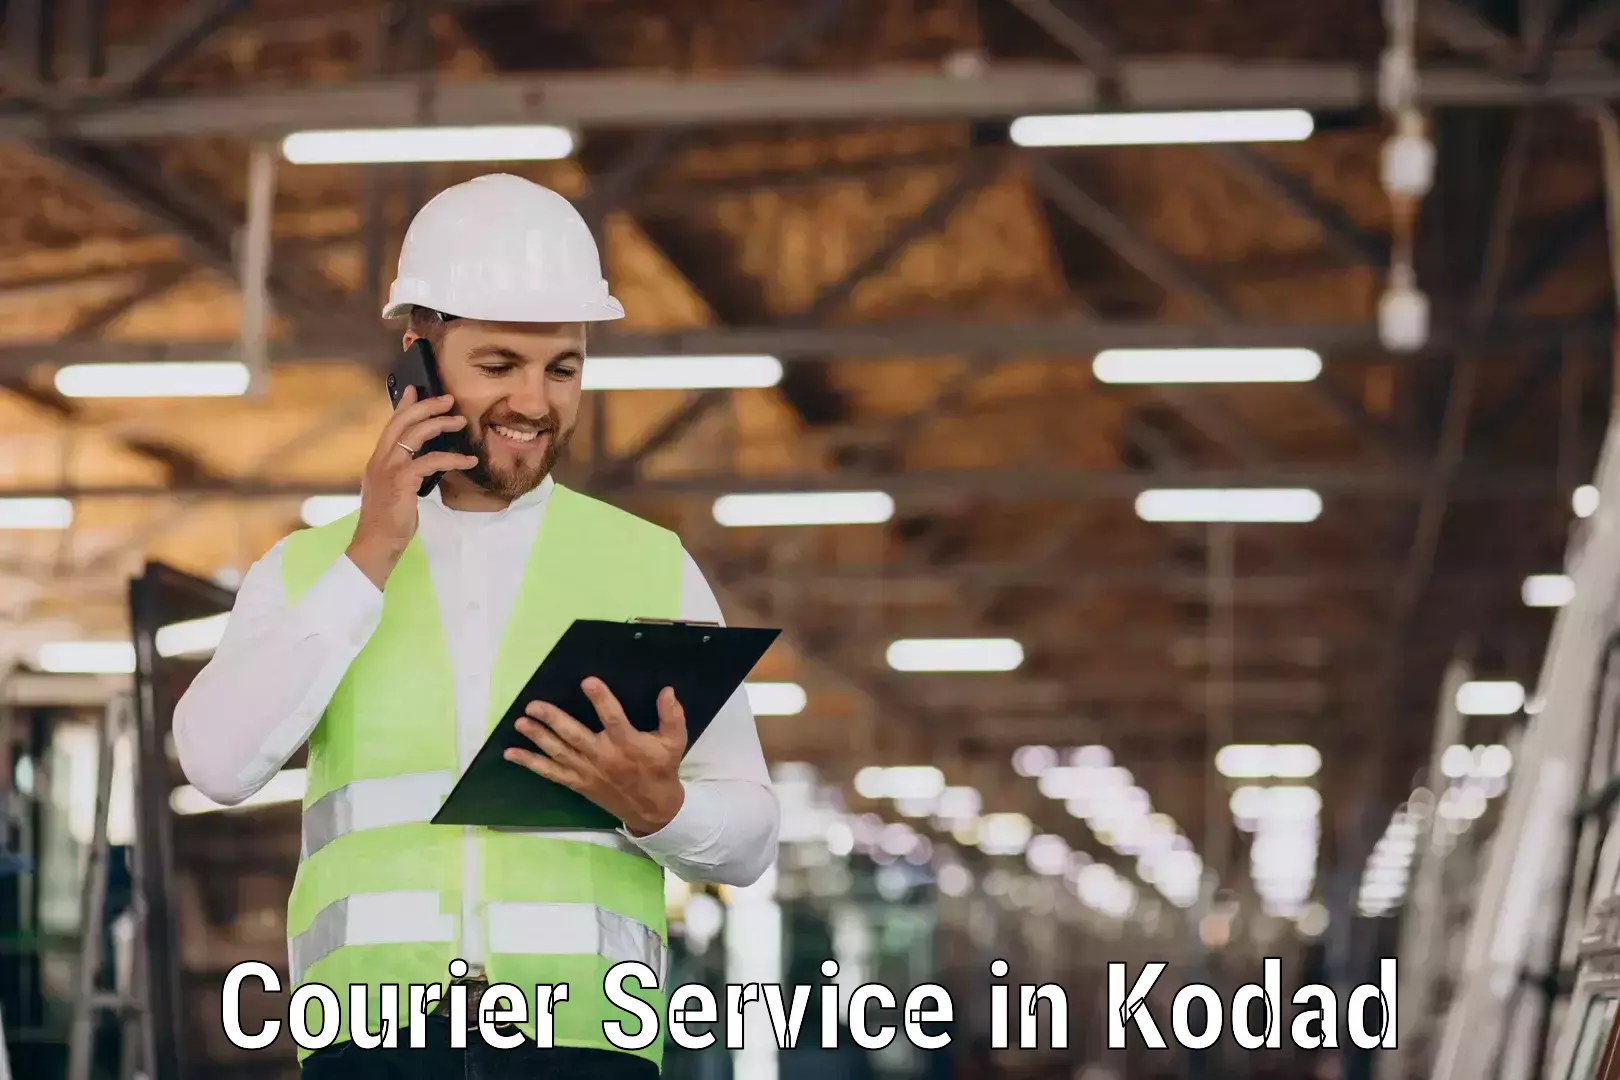 High-performance logistics in Kodad